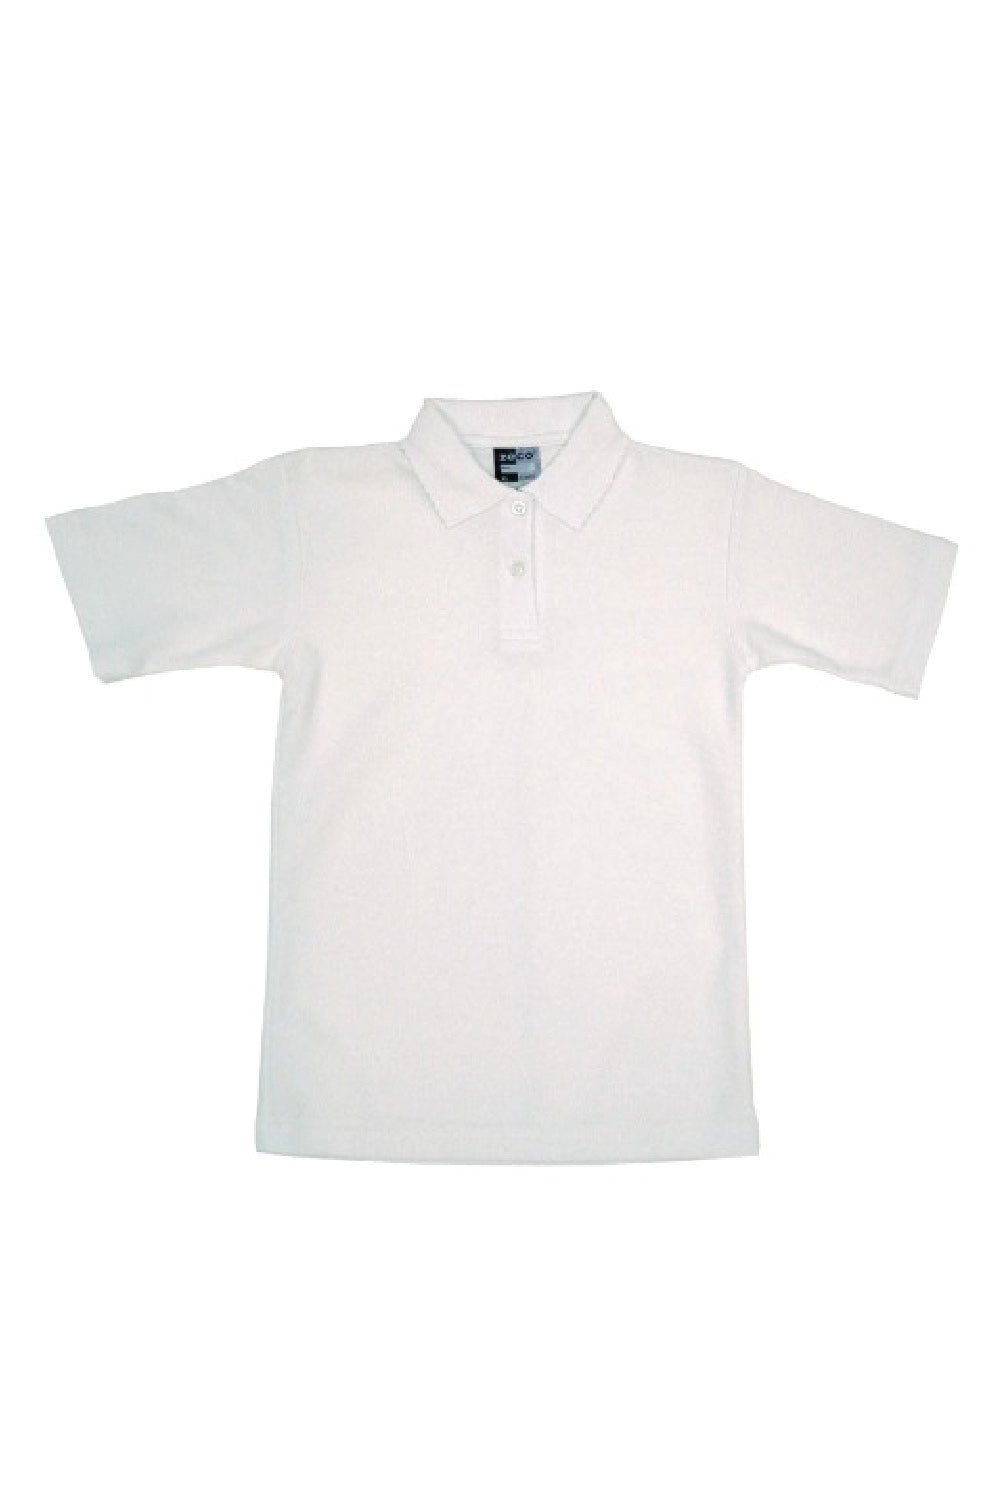 Vange Primary School Frilly Polo - Uniformwise Schoolwear